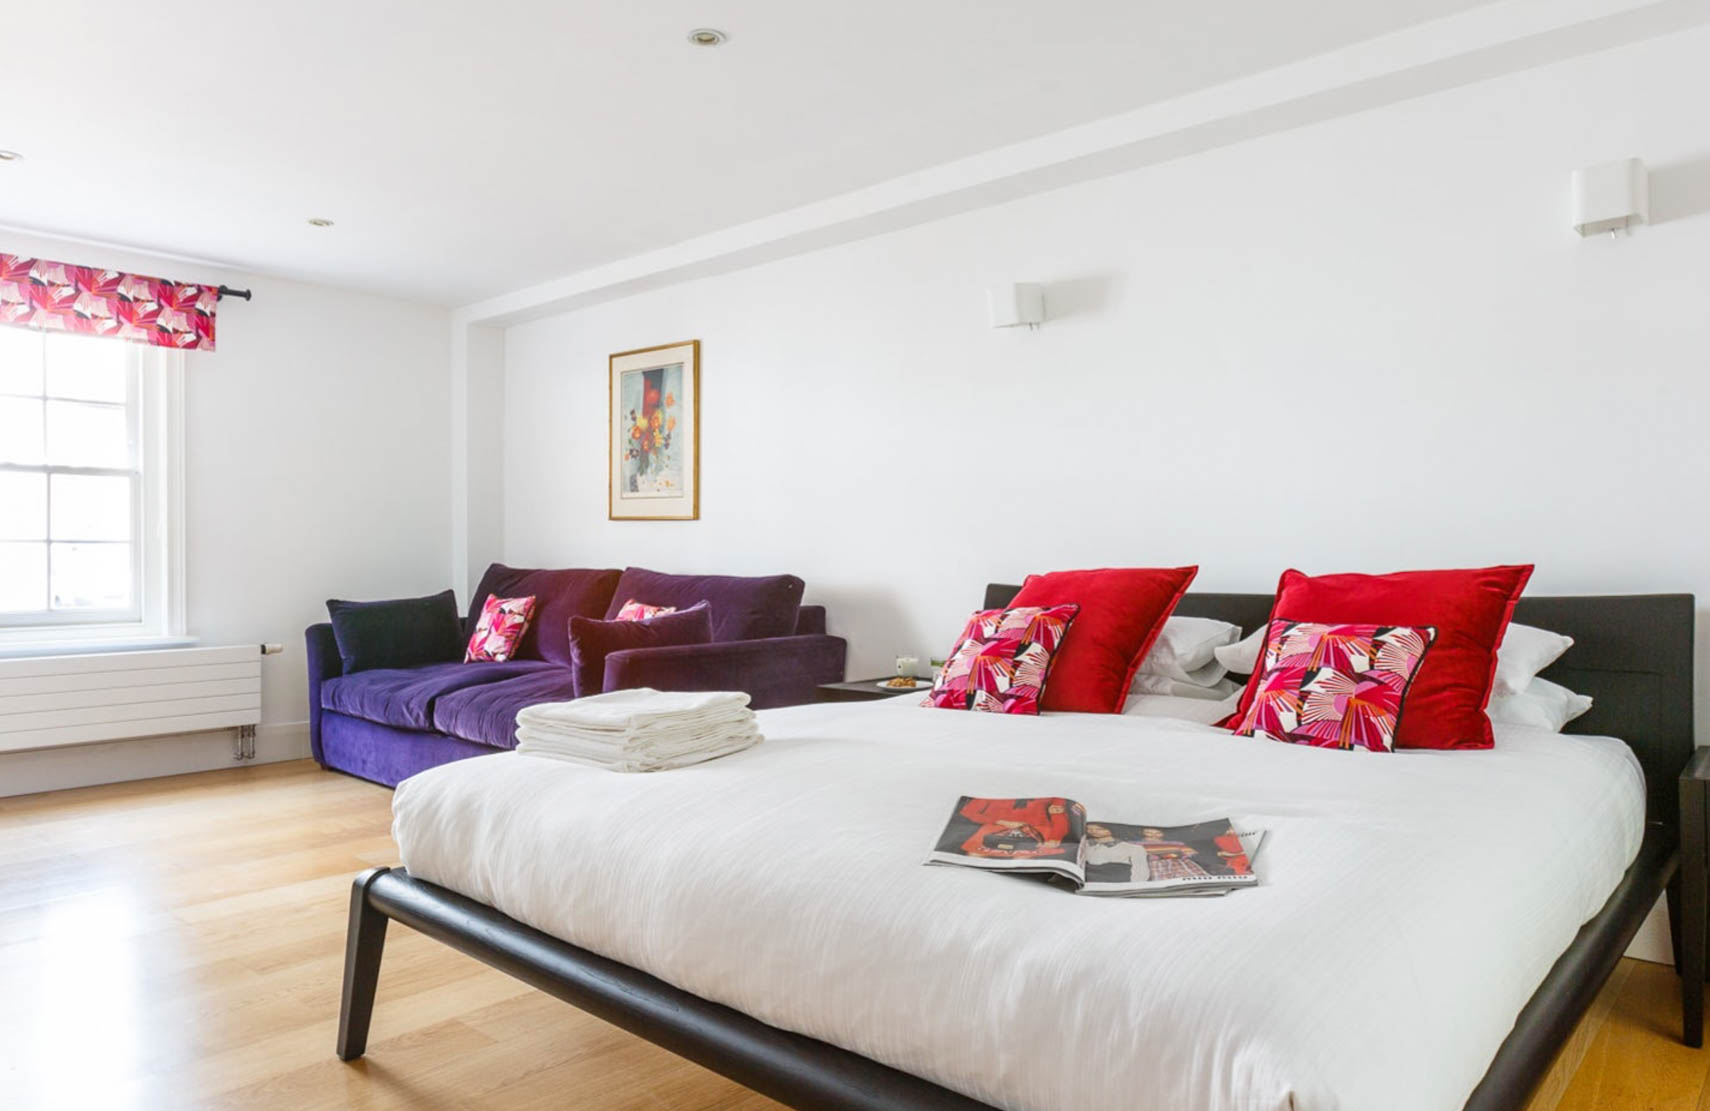 Lovelydays luxury service apartment rental - London - Notting Hill - Campden Street - Lovelysuite - 3 bedrooms - 2 bathrooms - King bed - dfe2d3397078 - Lovelydays